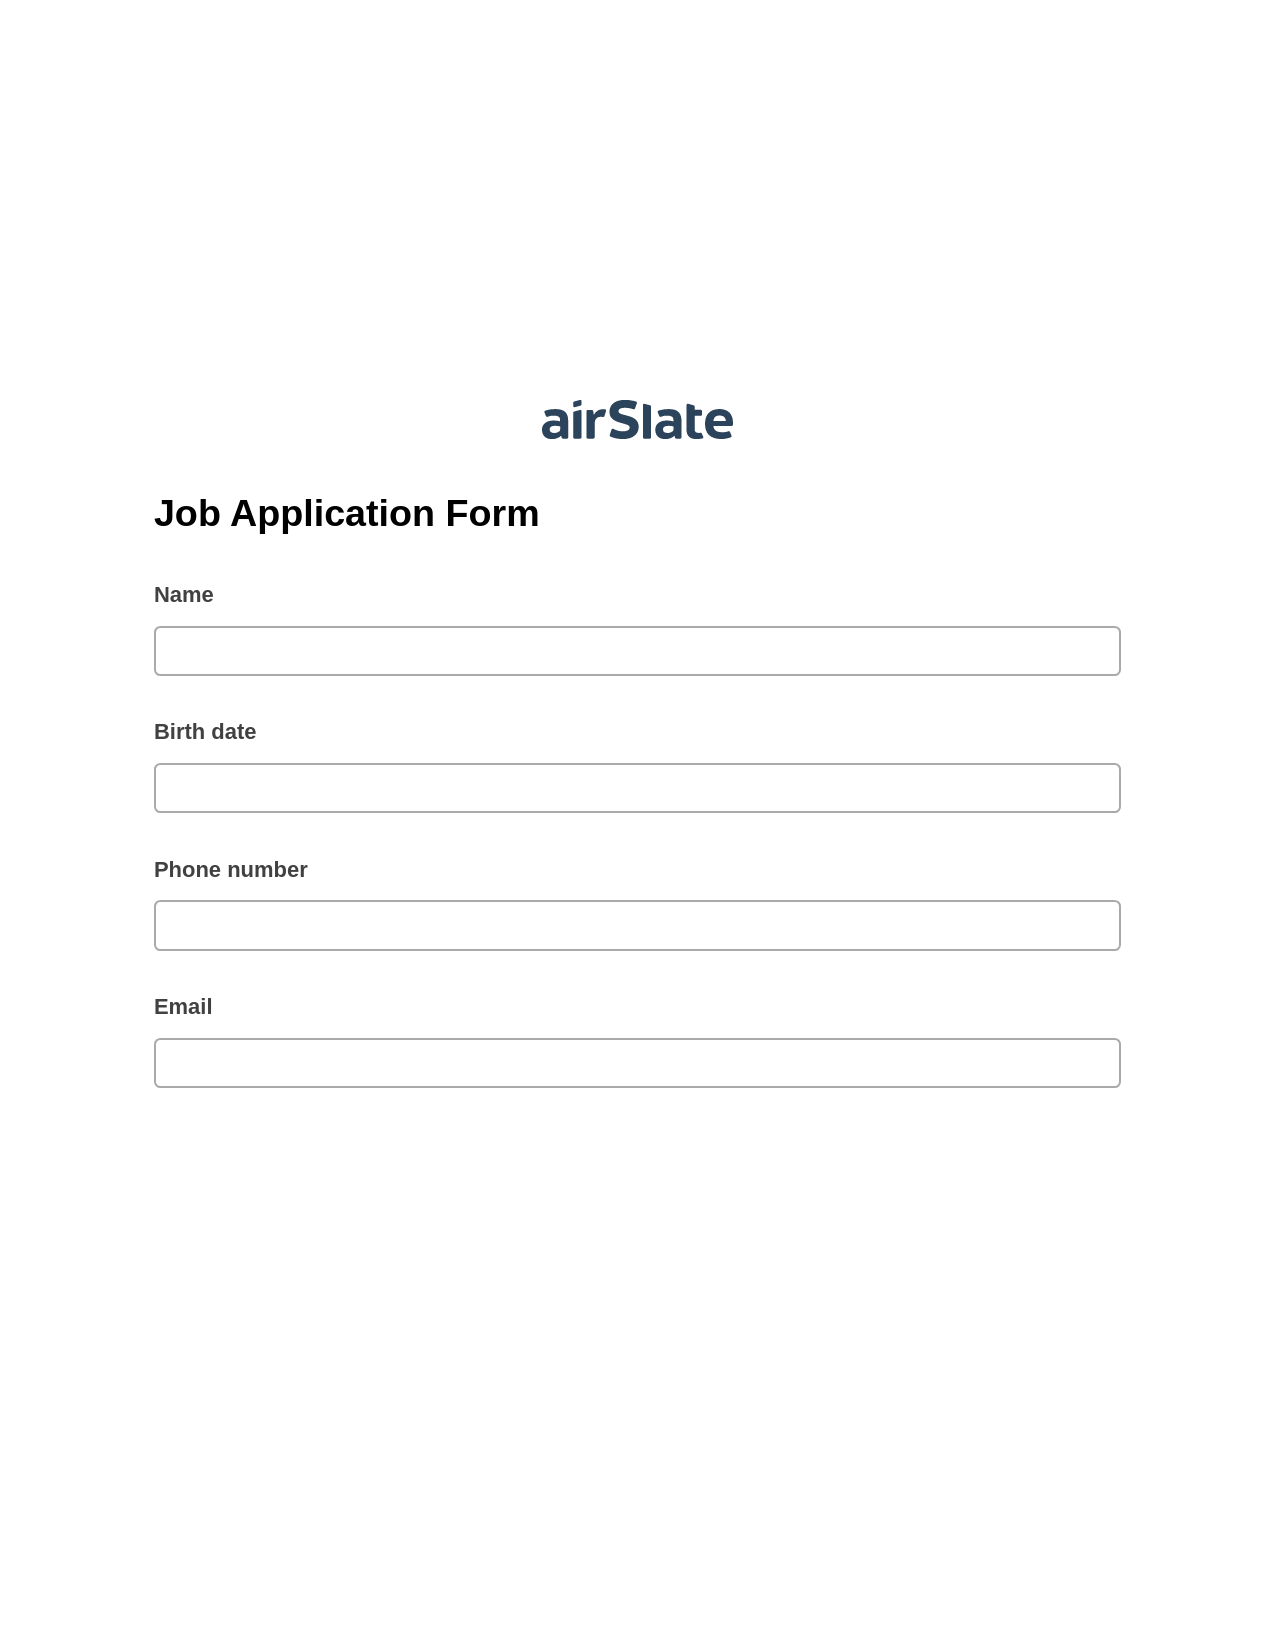 Job Application Form Pre-fill from MySQL Bot, Jira Bot, Post-finish Document Bot